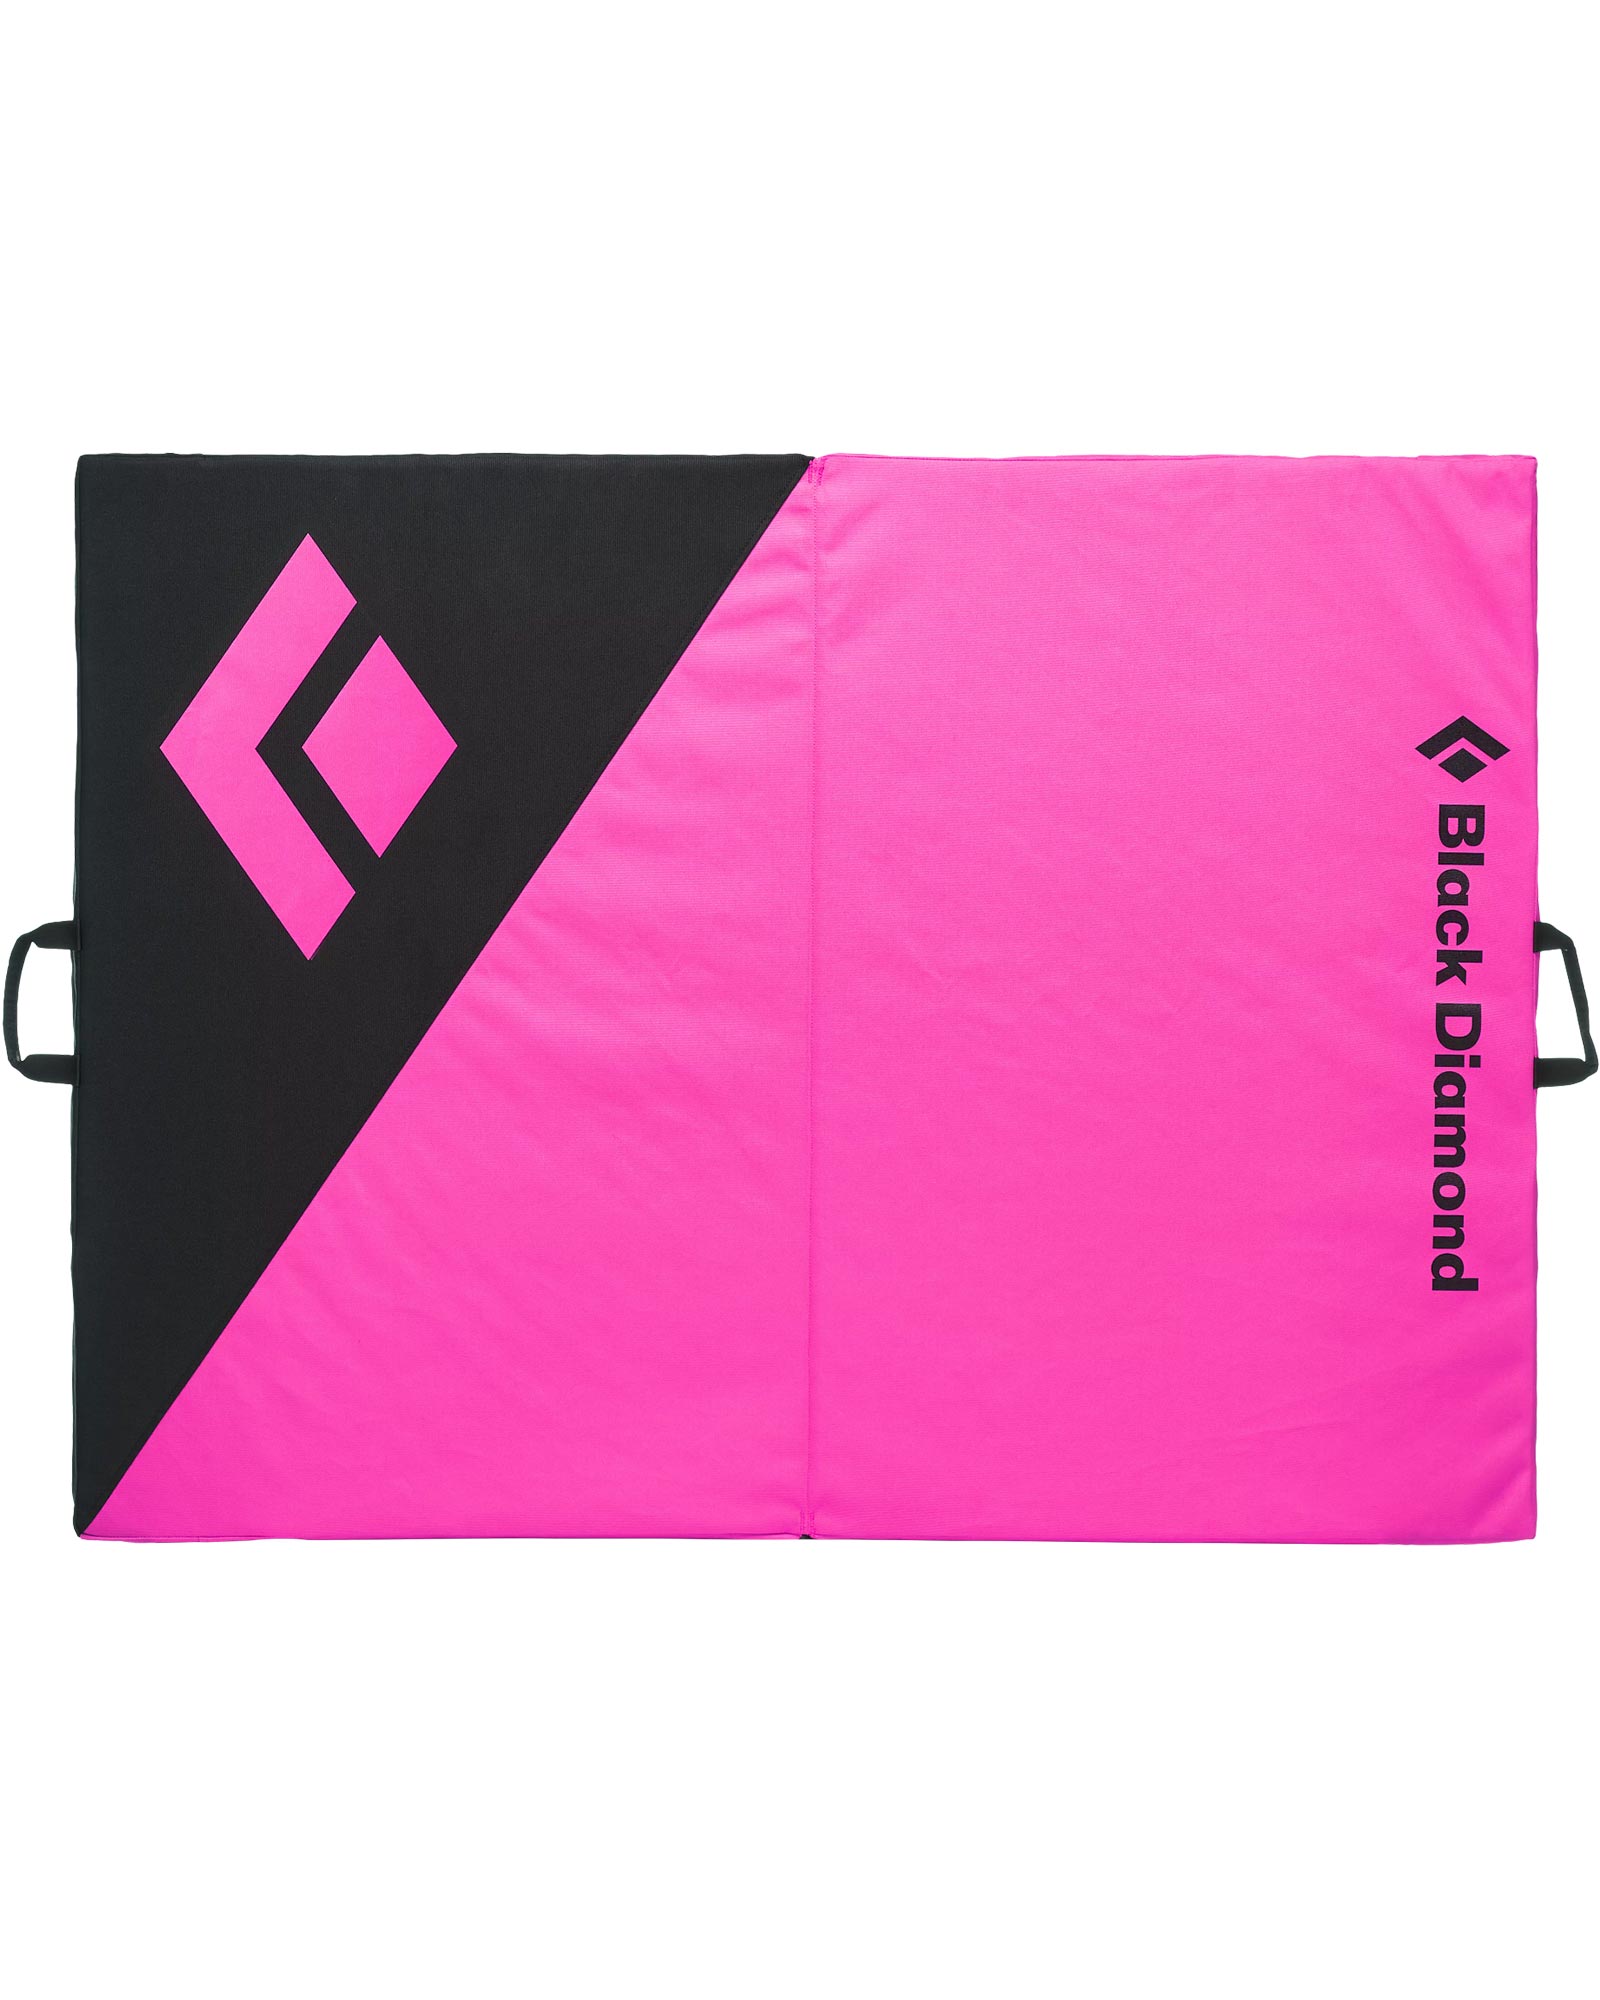 Black Diamond Circuit Mat - Ultra Pink